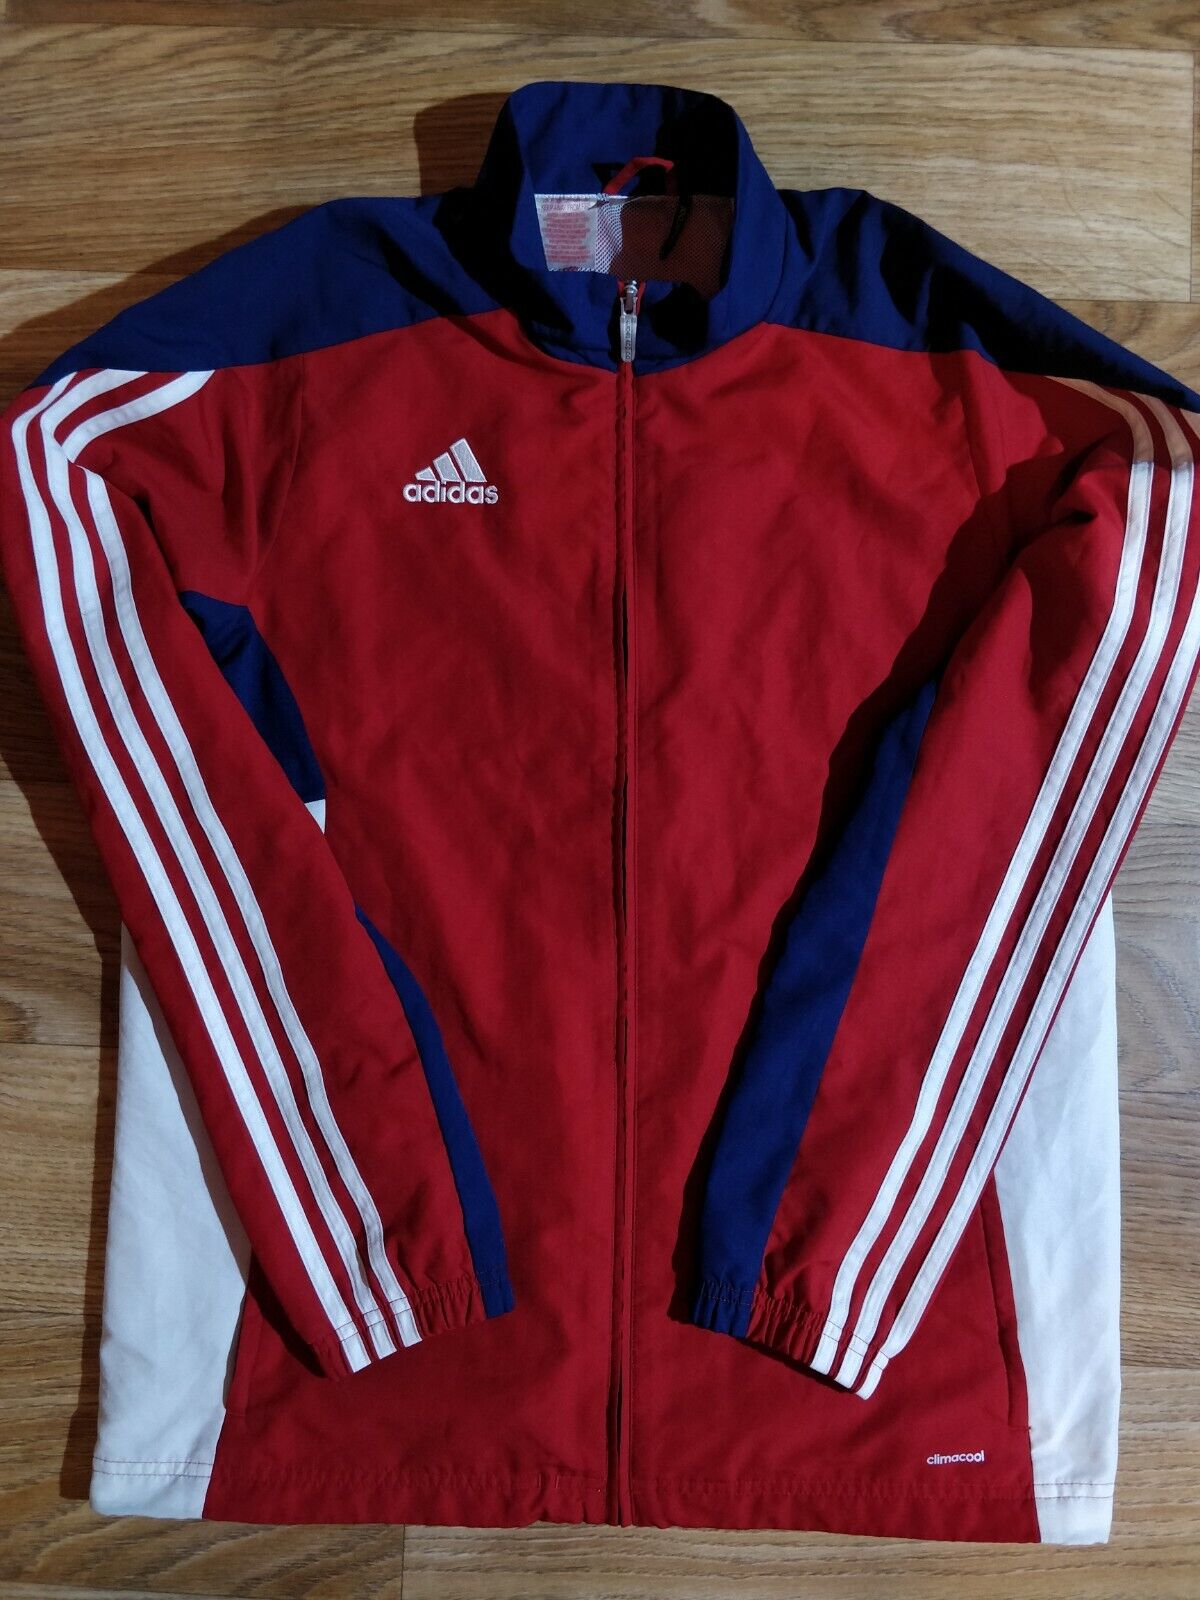 Mens Tracksuit Jacket Gymnastik Navy Red Climacool | eBay